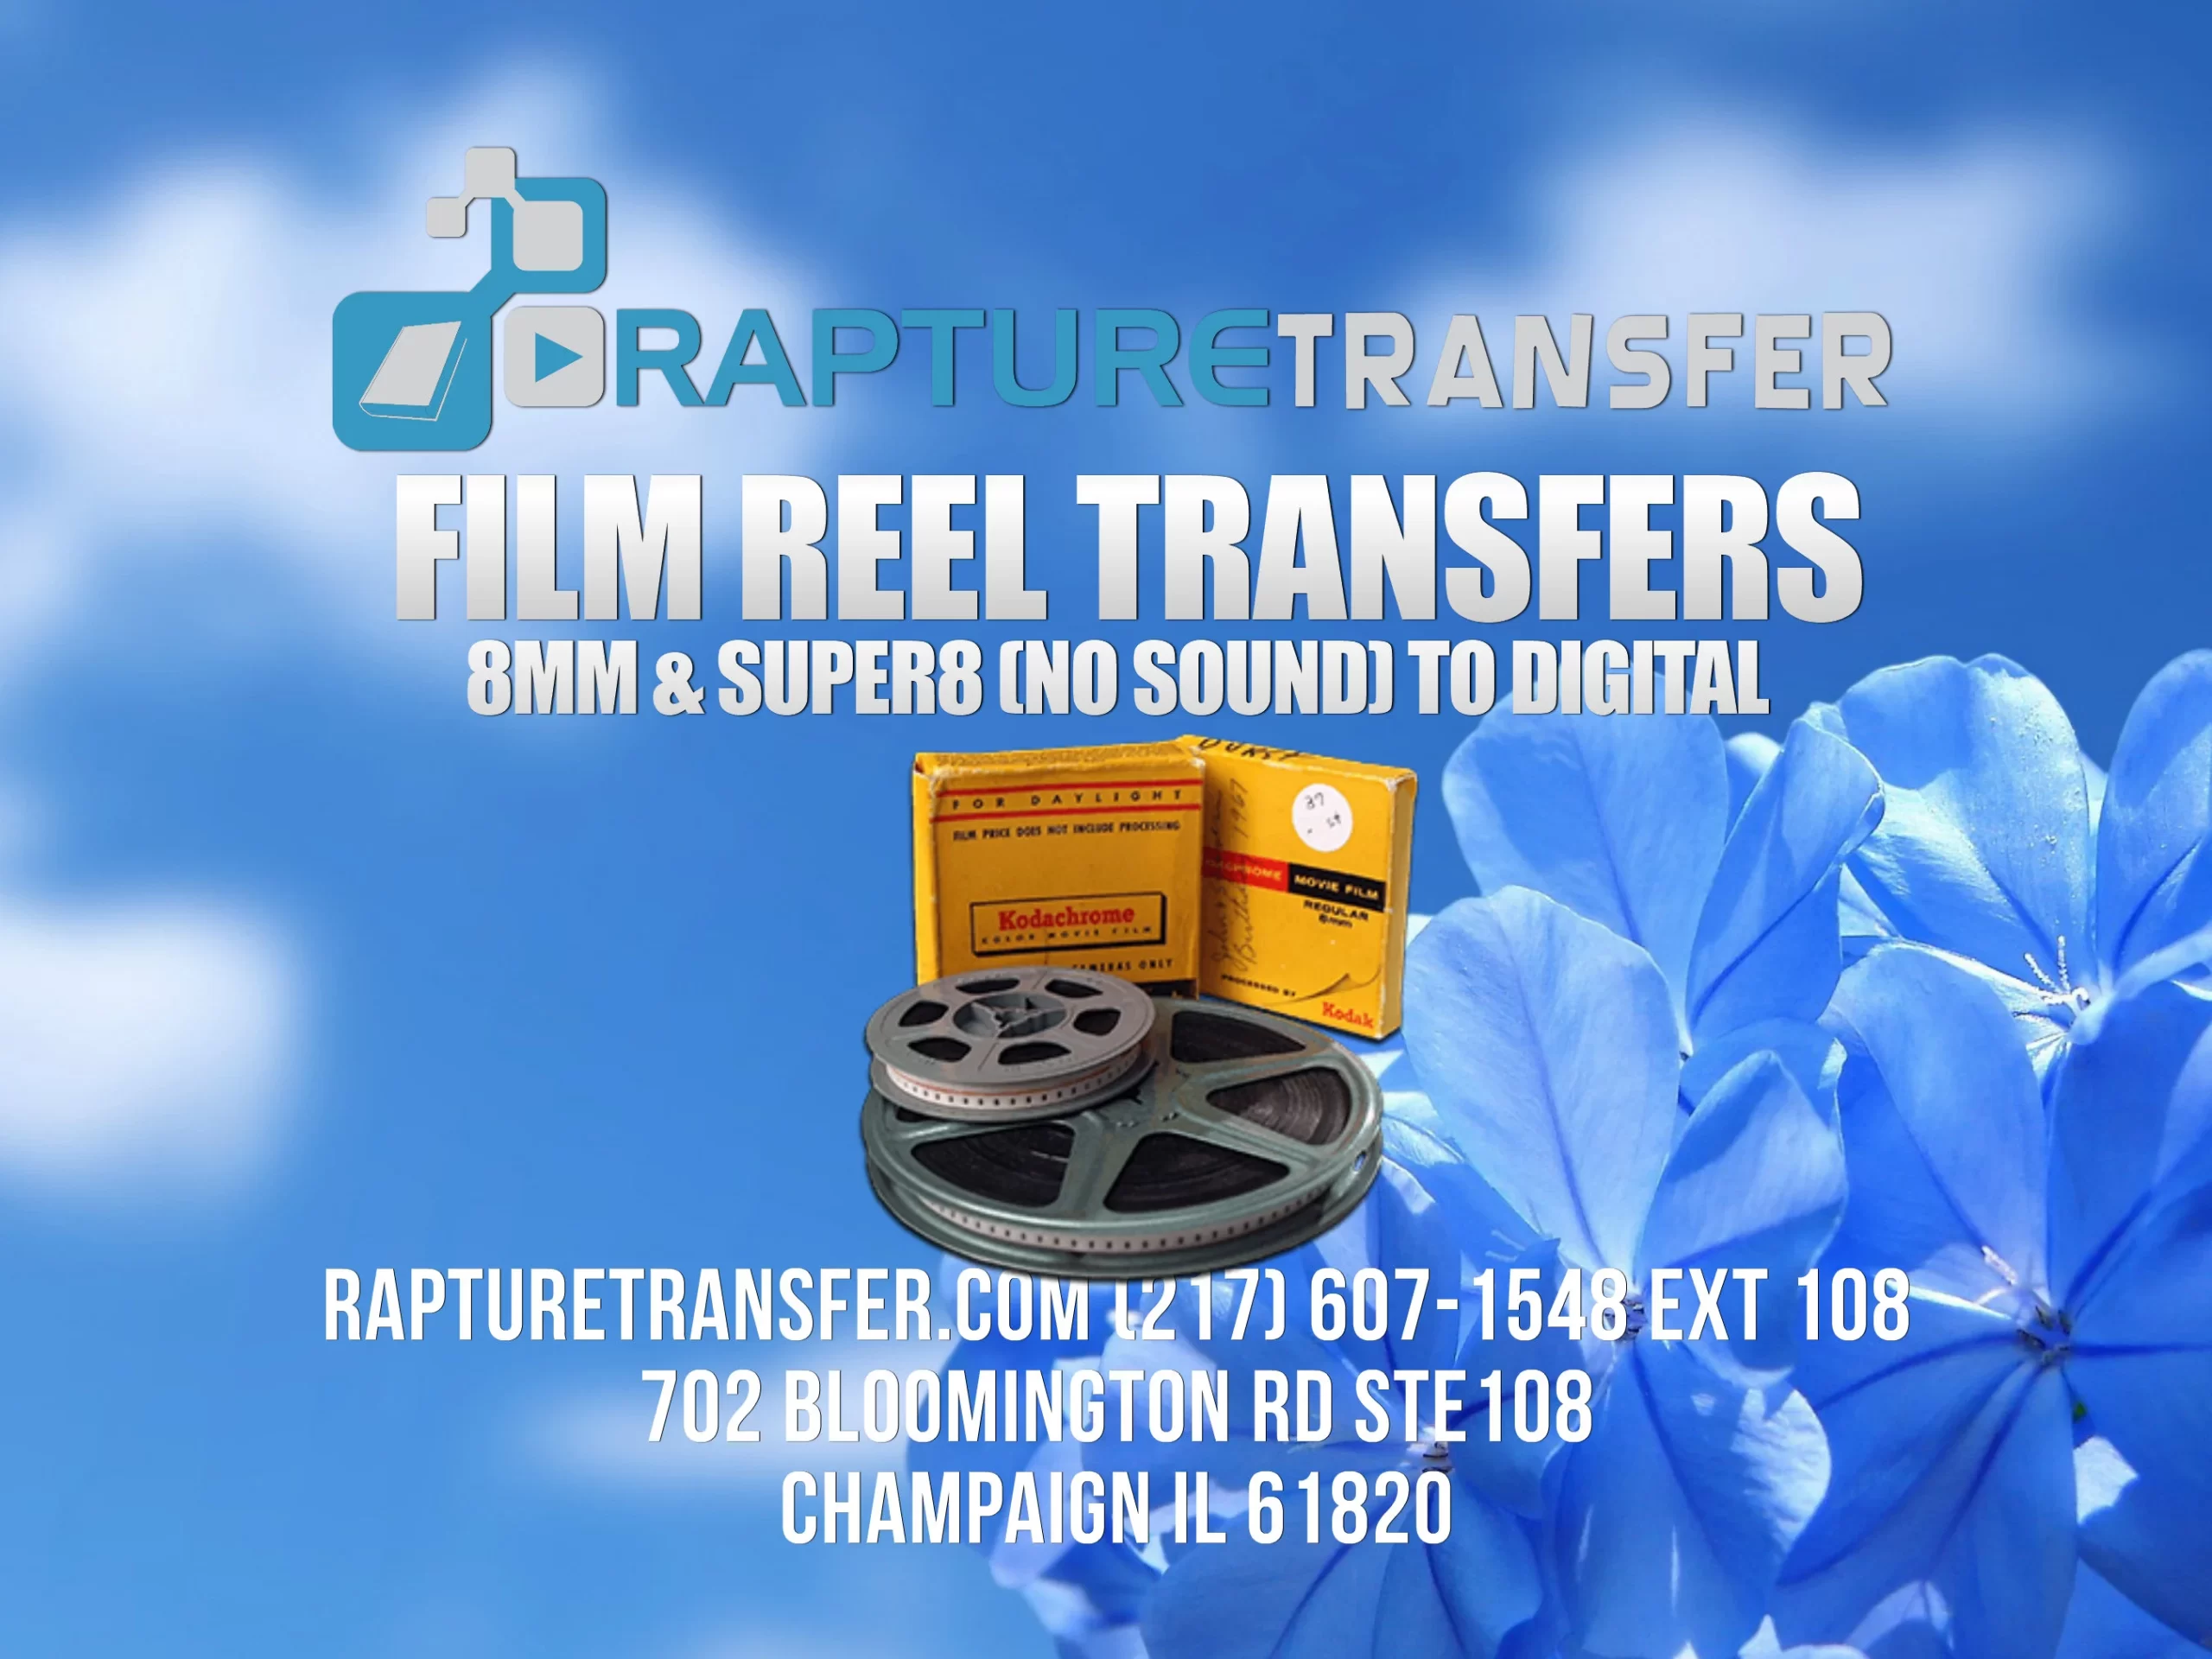 FILM REEL TRANSFER – Rapture Transfer